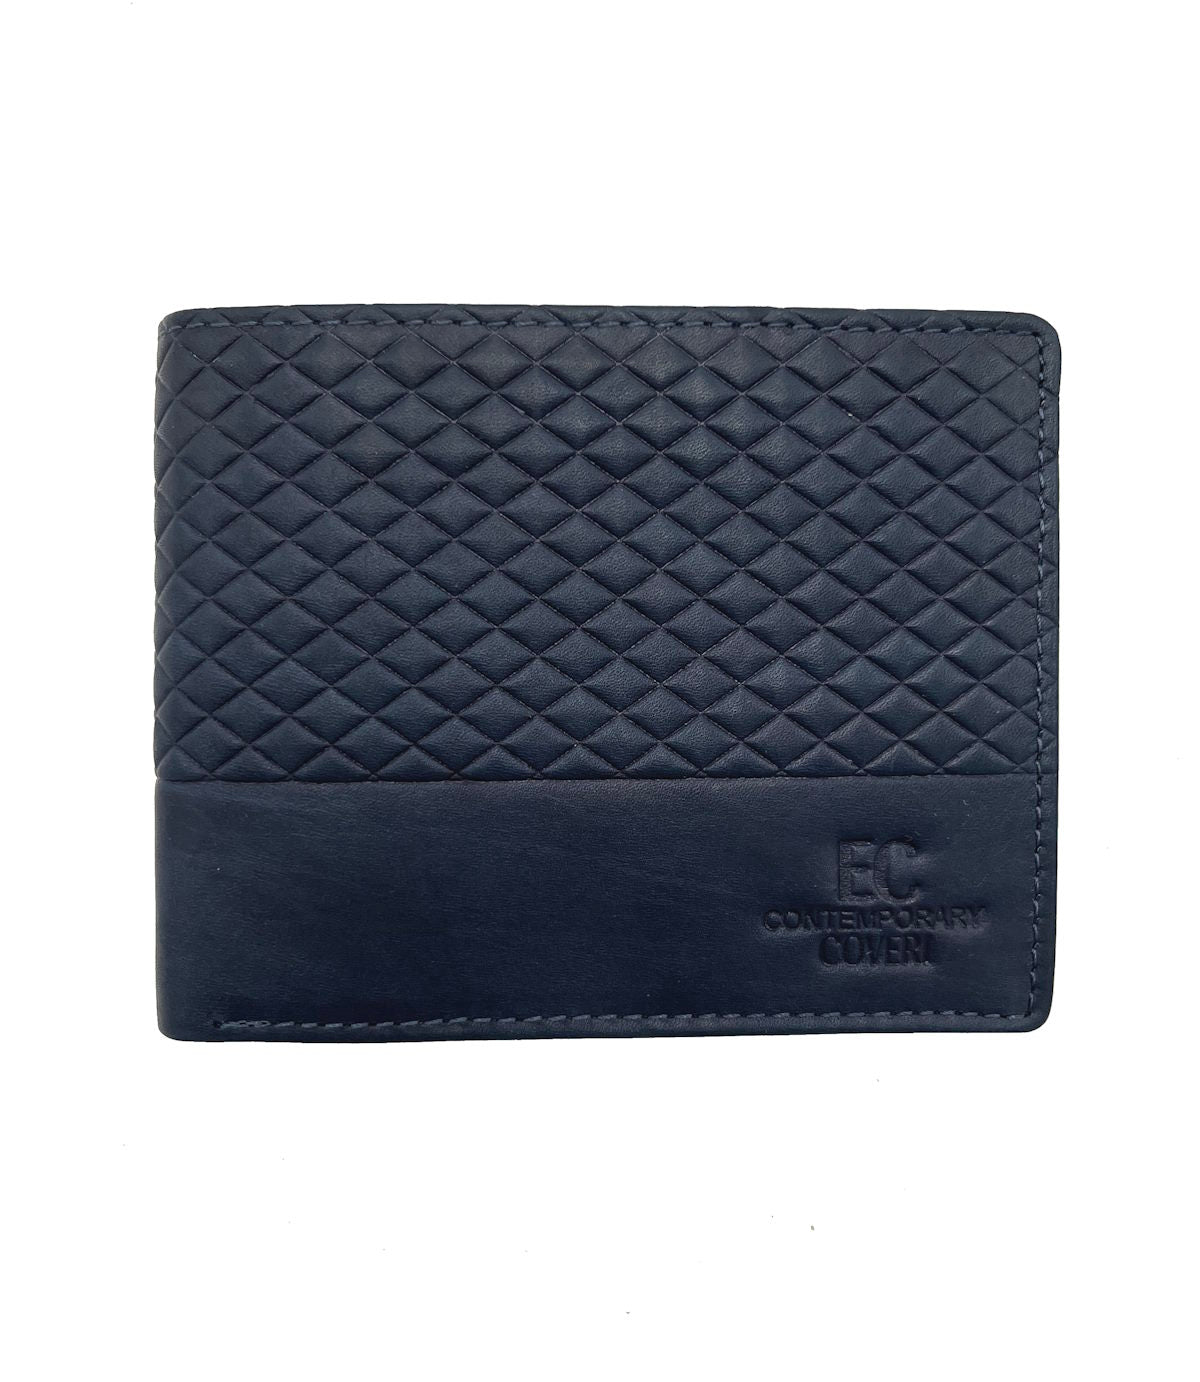 Genuine leather Wallet, Brand EC COVERI, art. EC23762-06